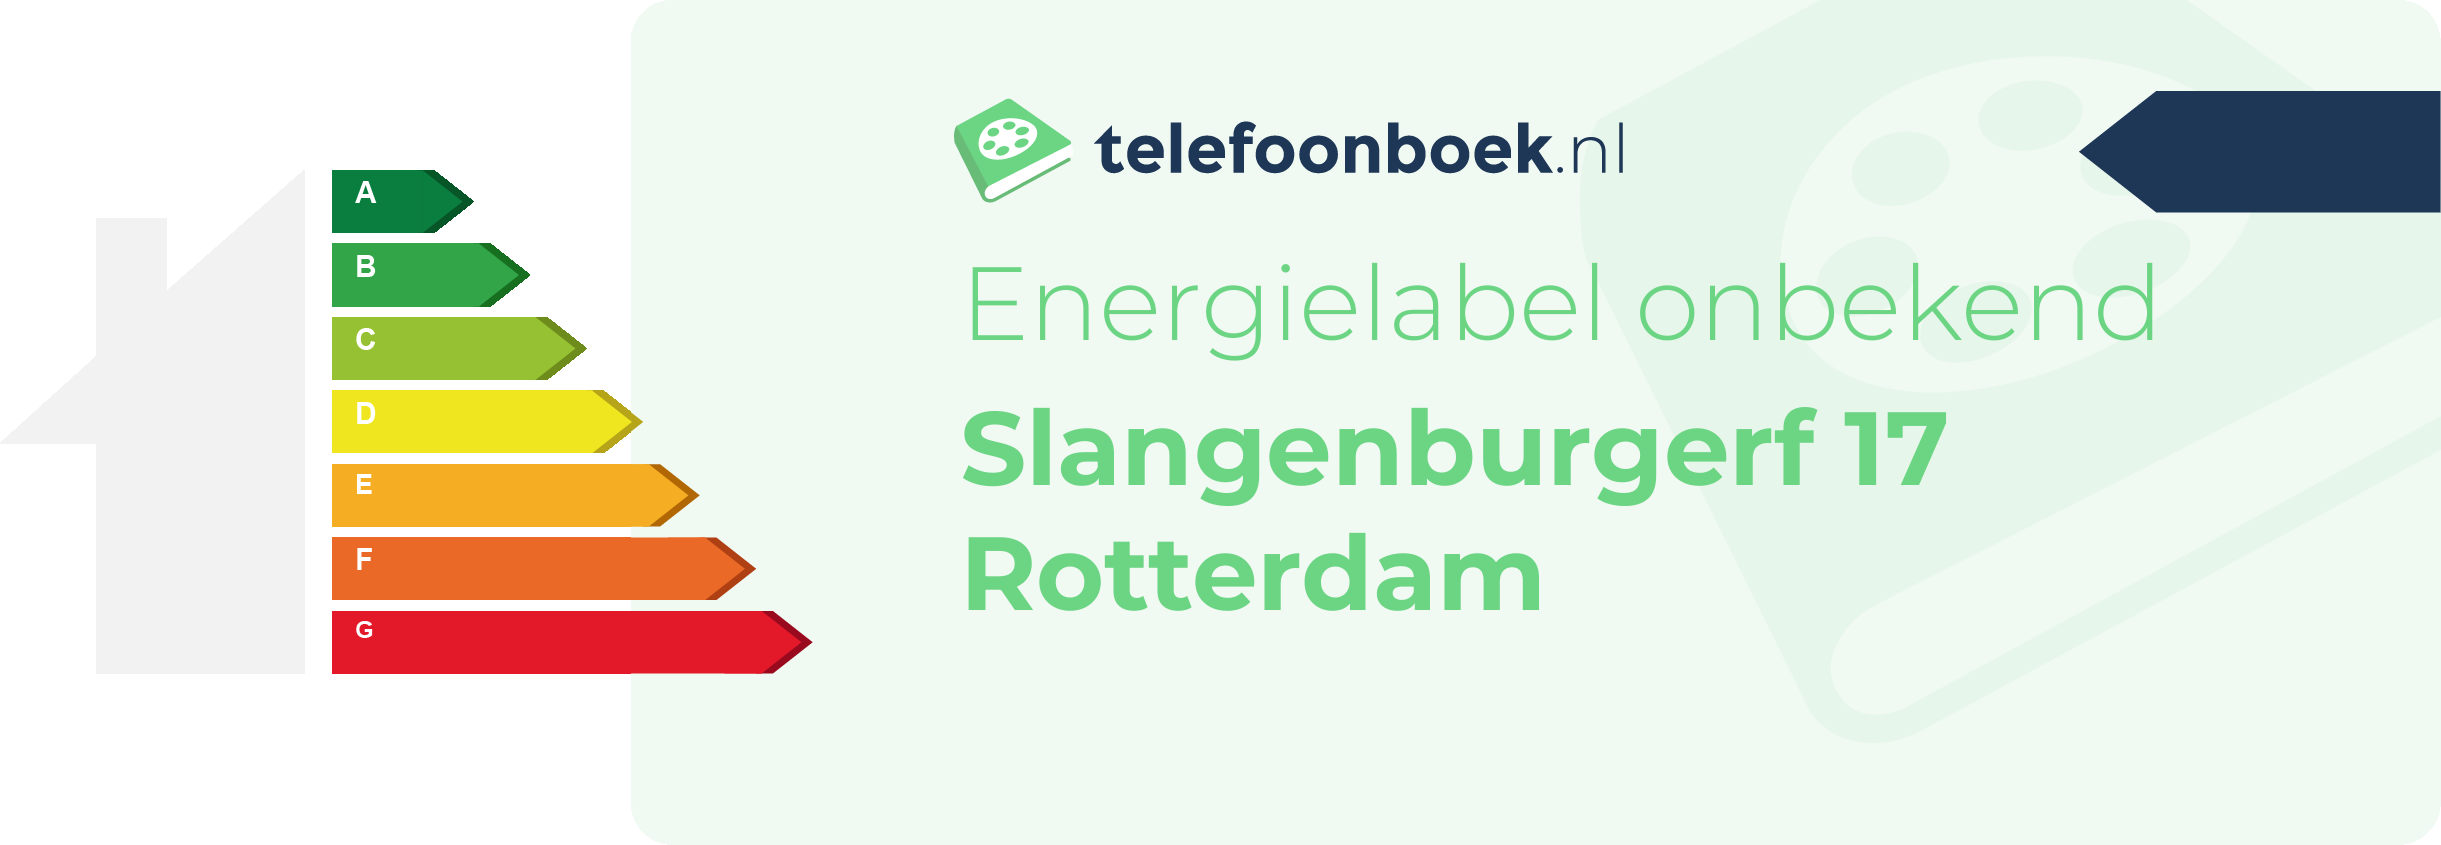 Energielabel Slangenburgerf 17 Rotterdam